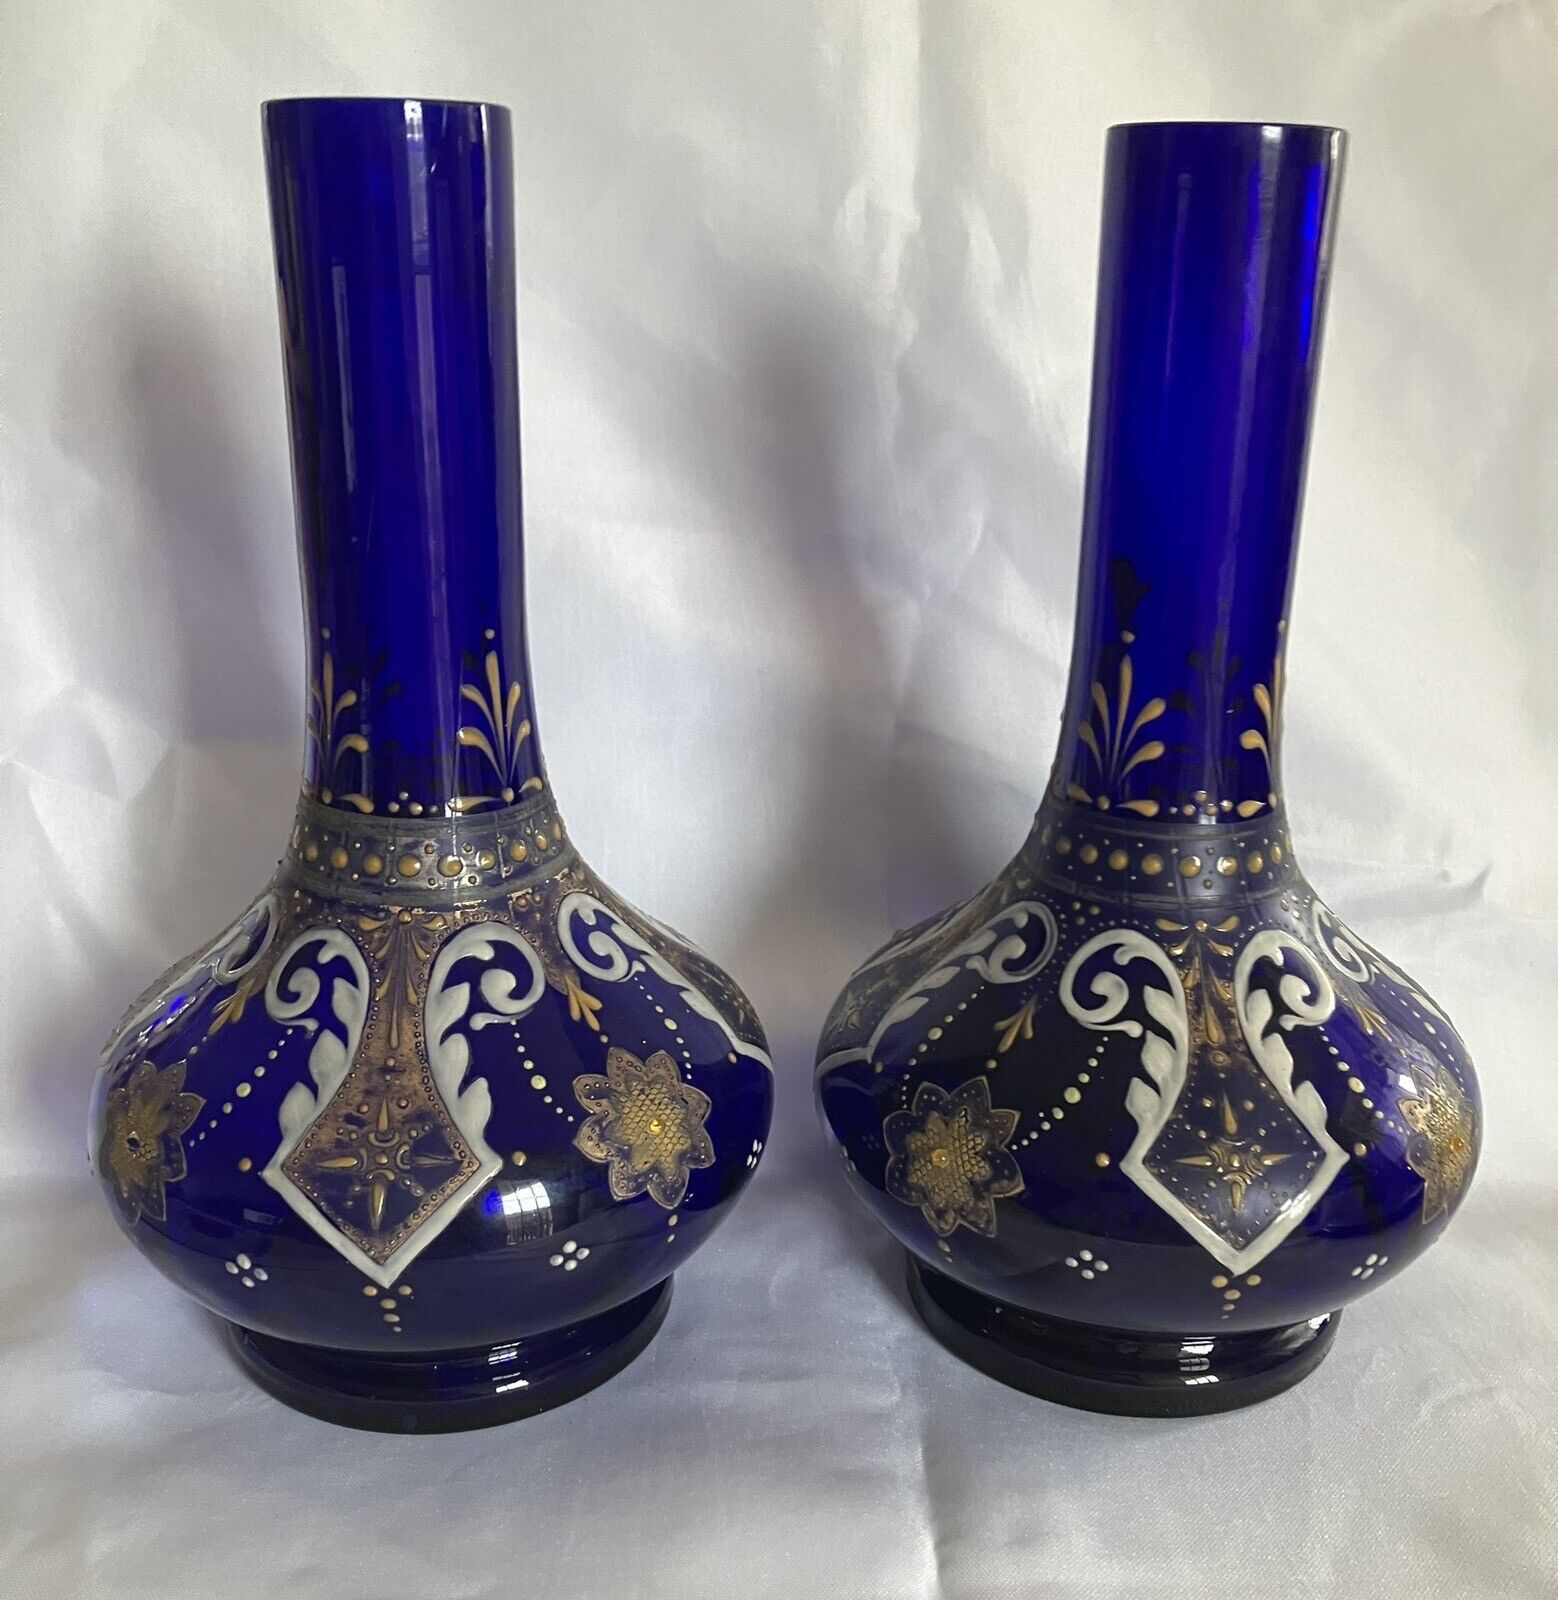 Stunning Pair of Cobalt Blue Czech Glass Vases